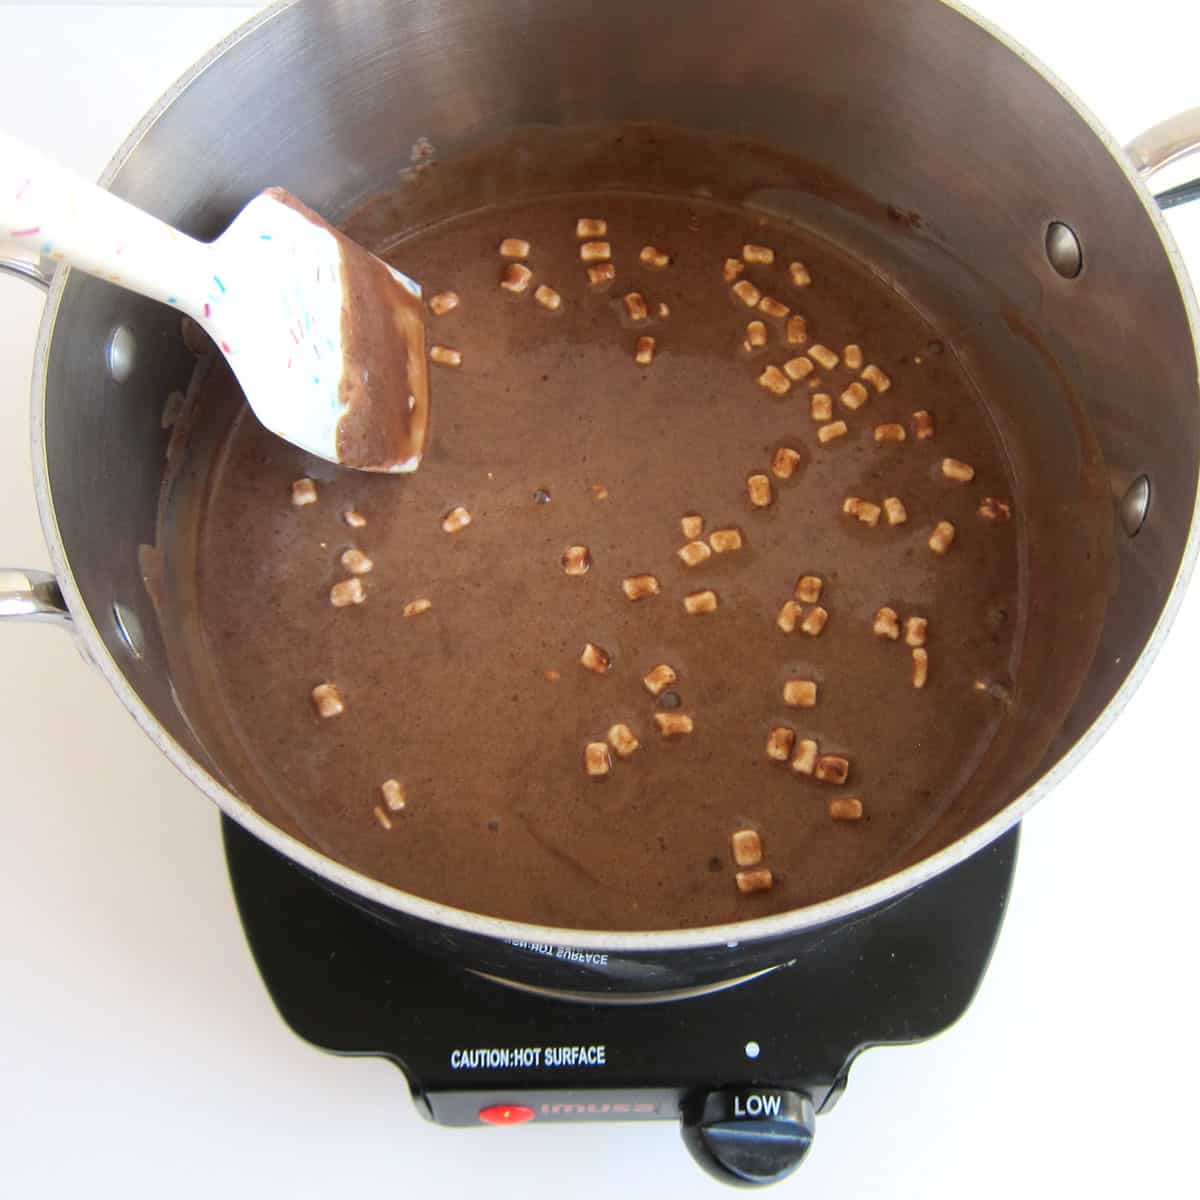 hot cocoa mix stirring into heavy cream in a saucepan.